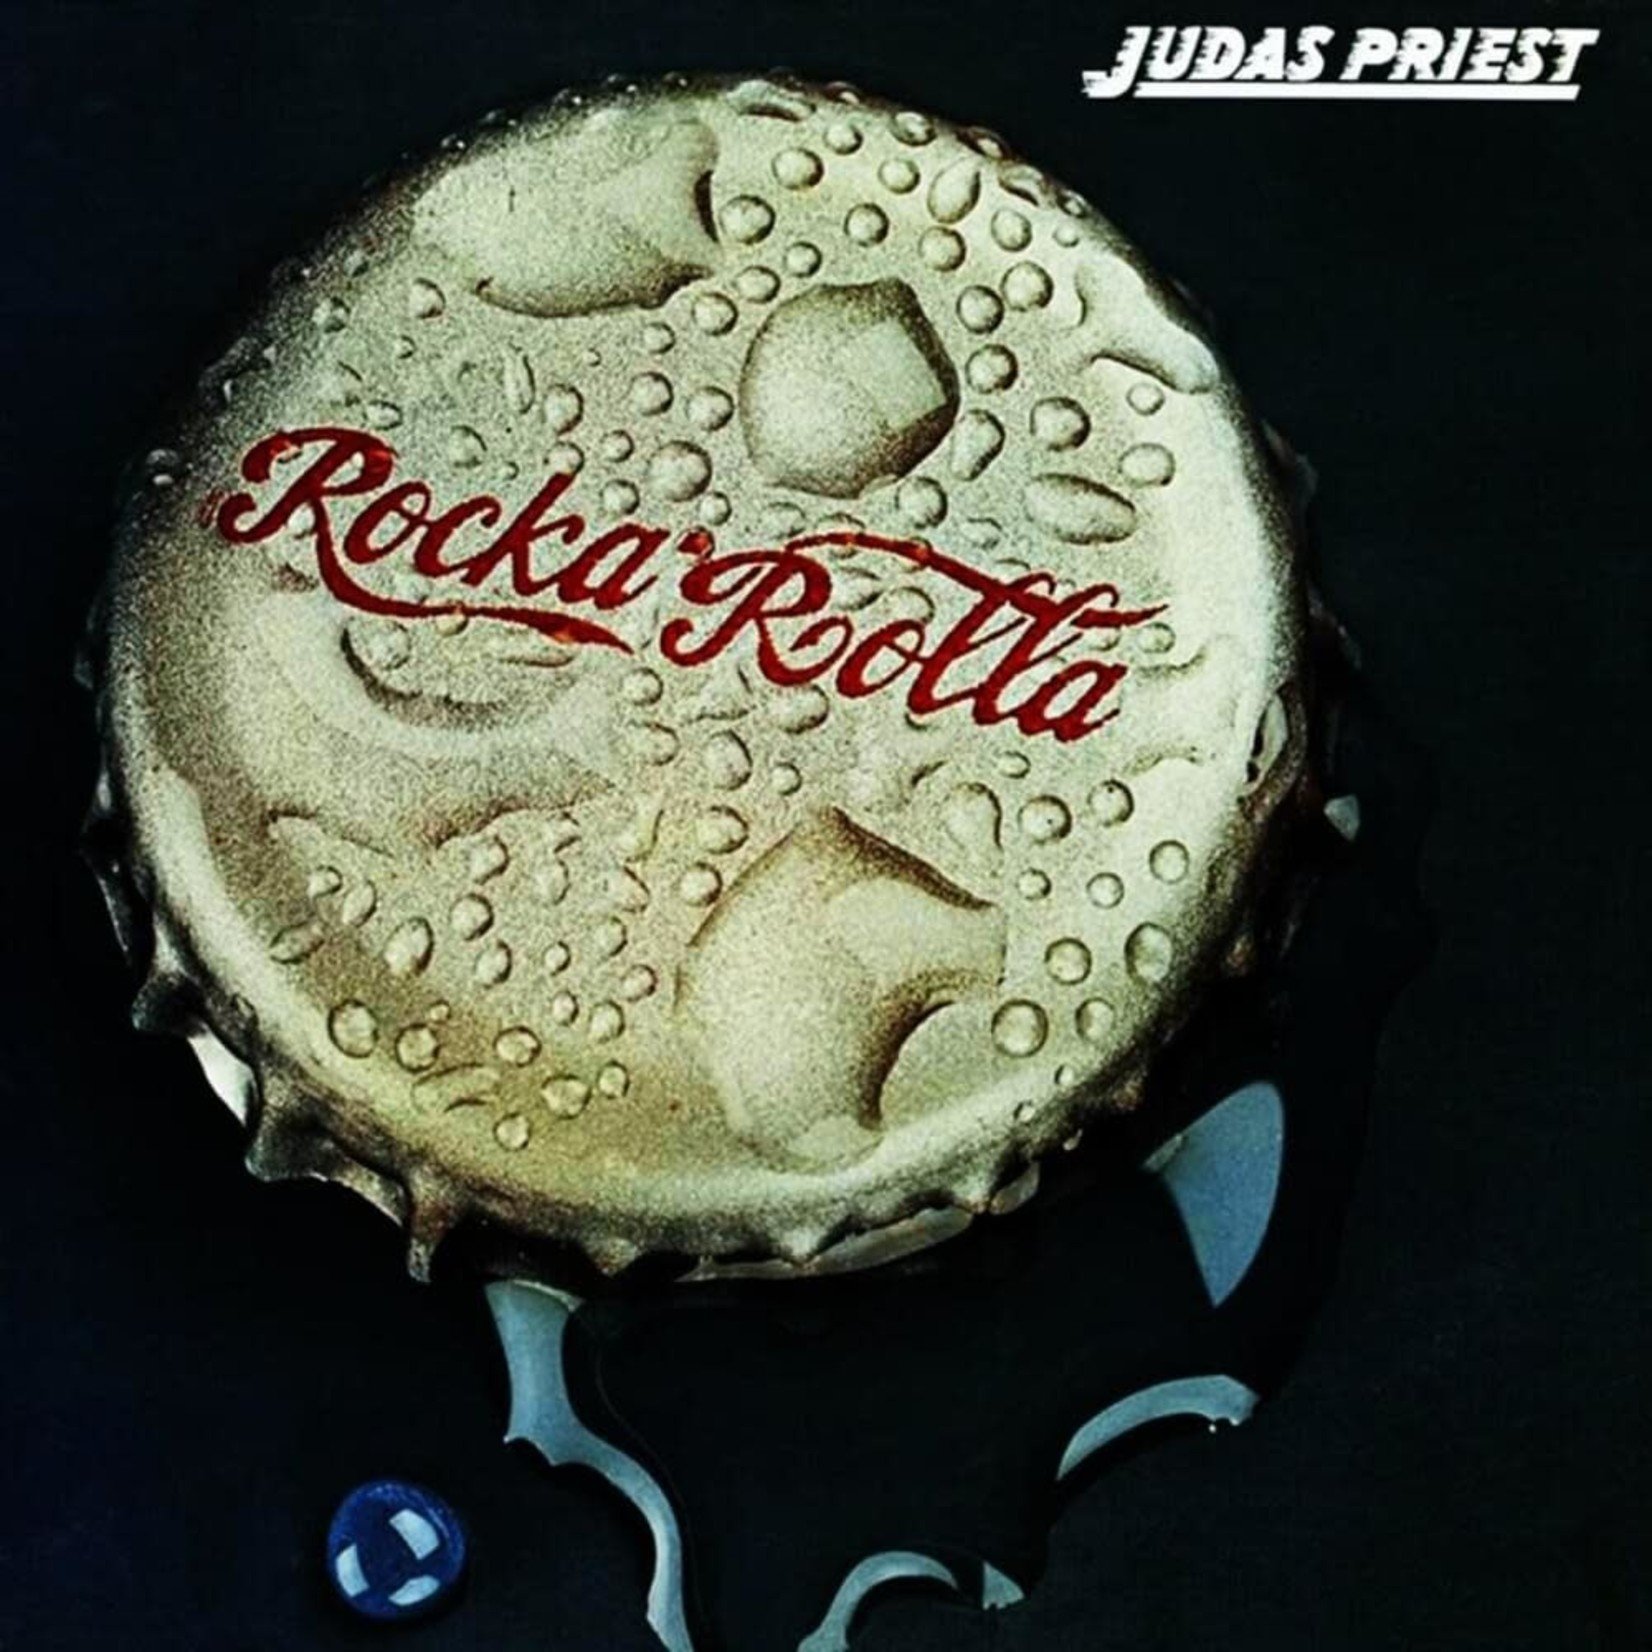 [New] Judas Priest - Rocka Rolla (colour vinyl)